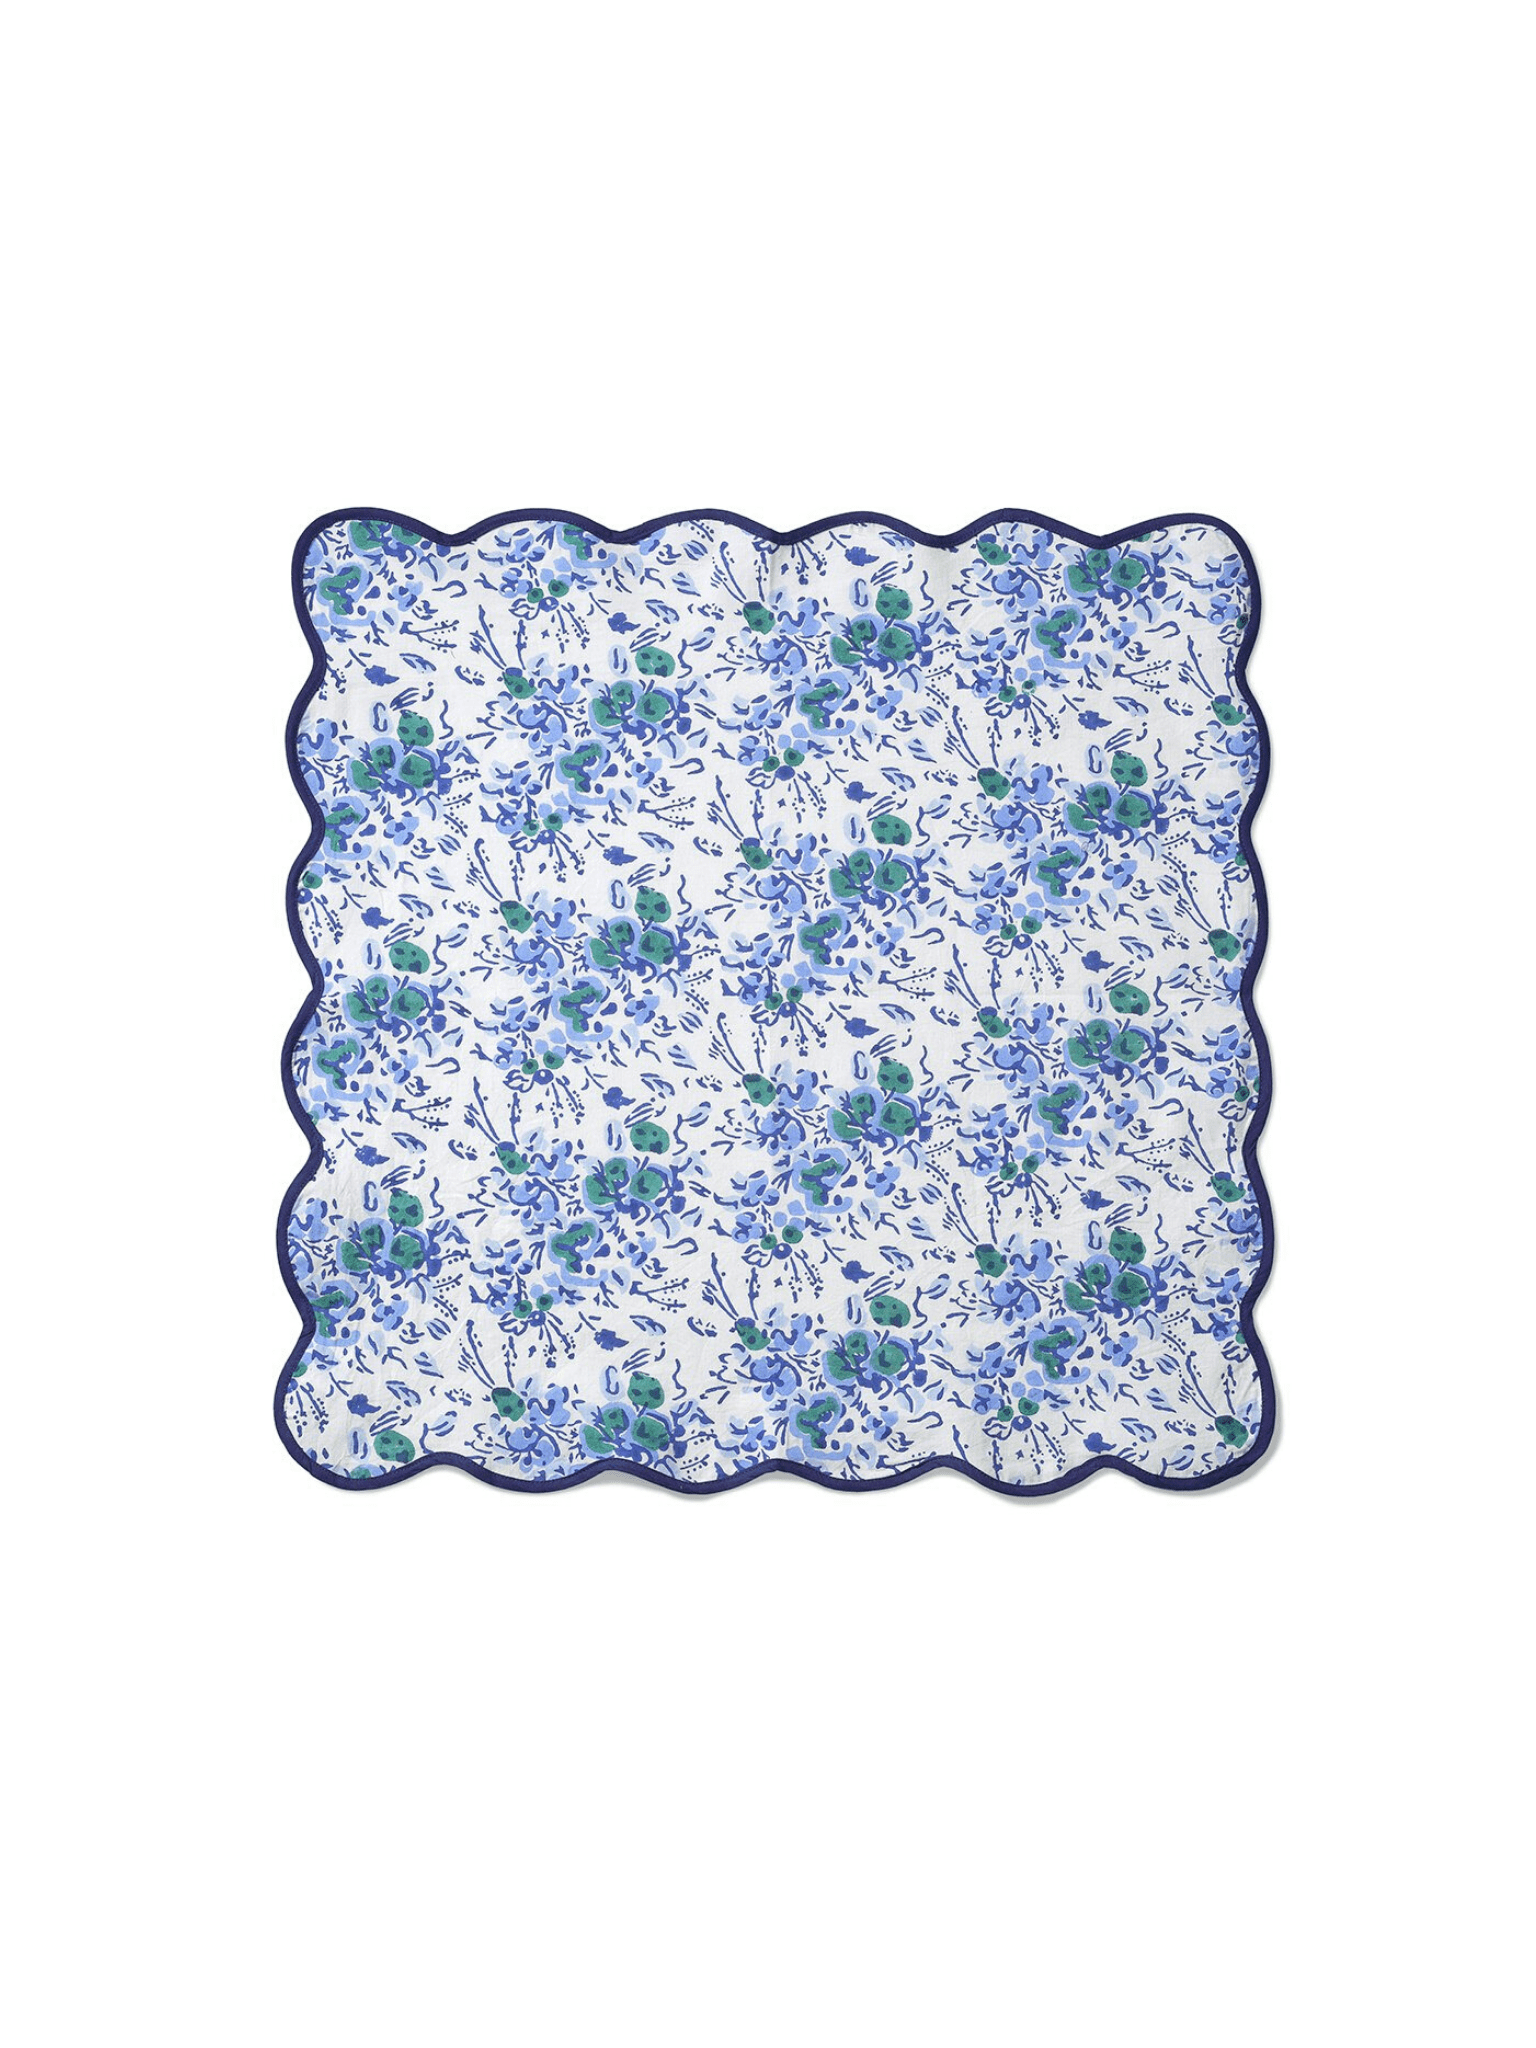 Caspari Cloth Dinner Napkins Set of 4 Block Print Leaves Blue